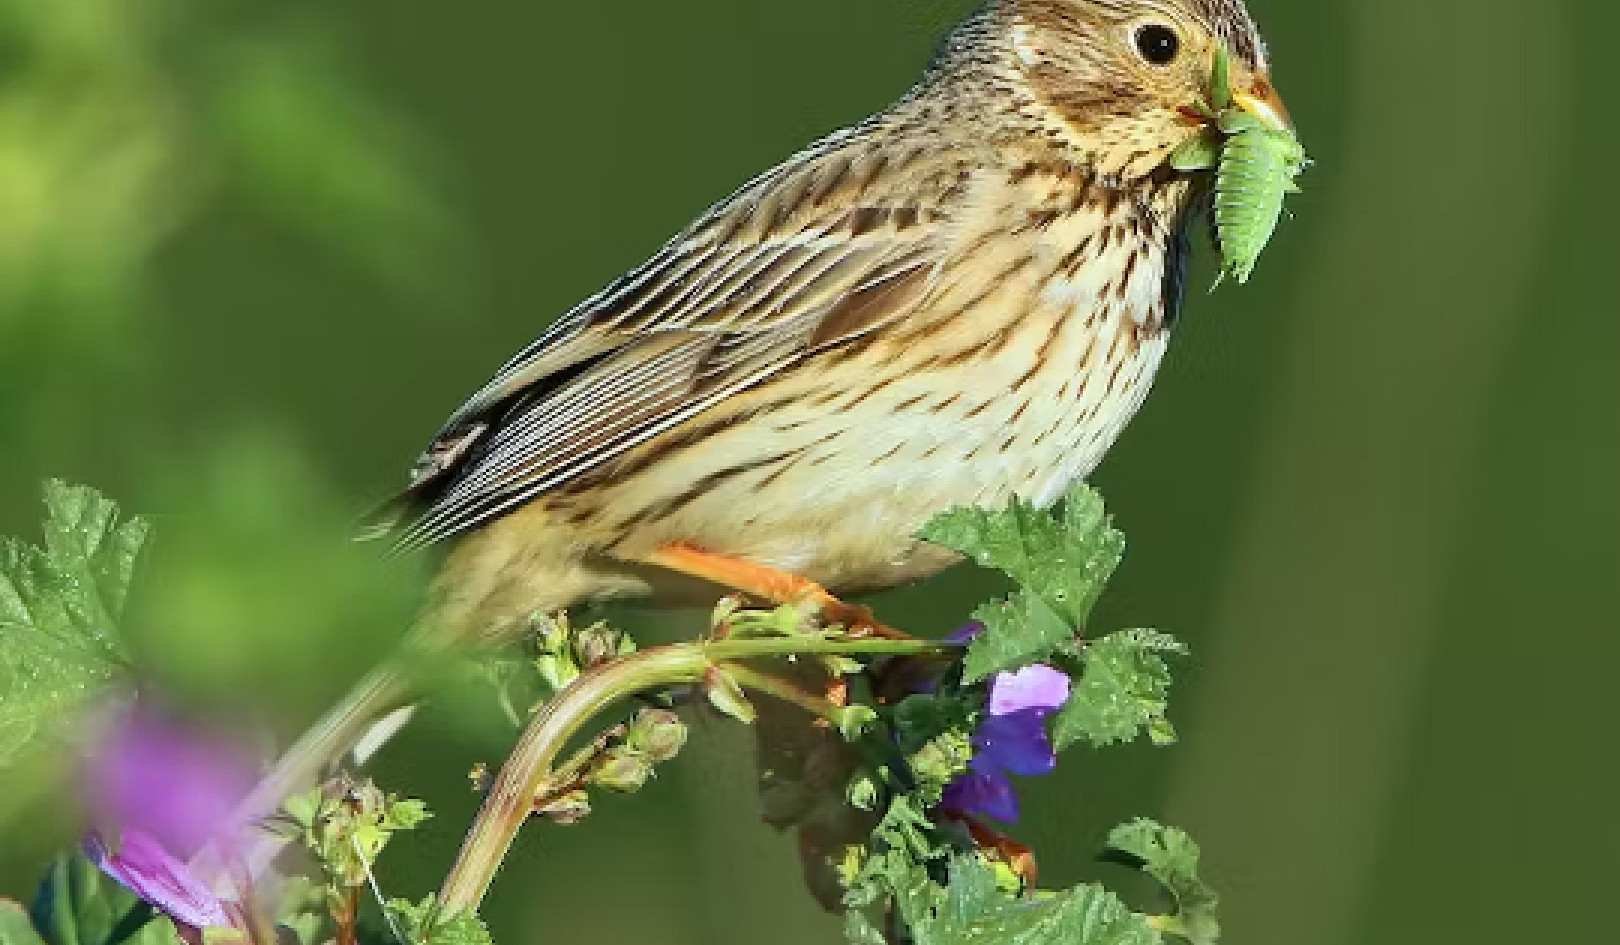 Silent Skies: The Alarming Decline of Europe's Bird Populations